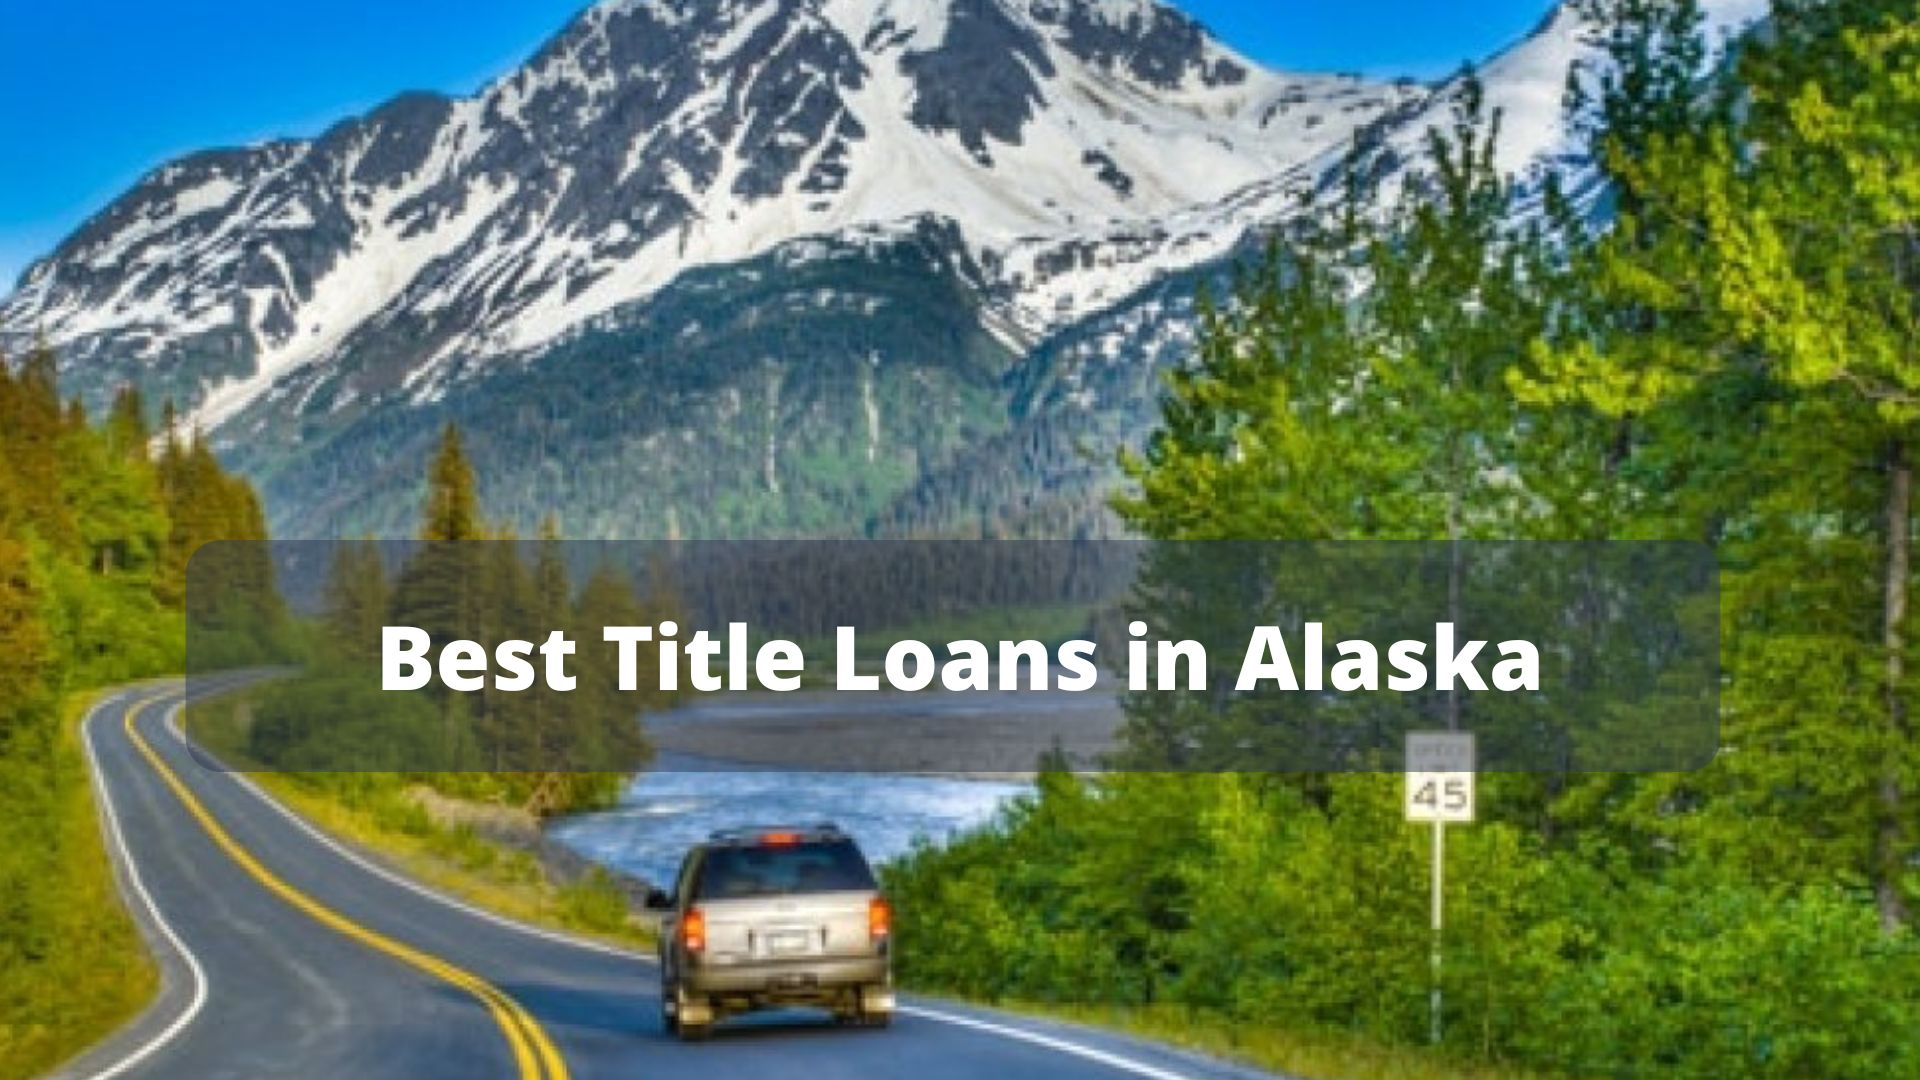 Best Title Loans in Alaska - Complete Overview